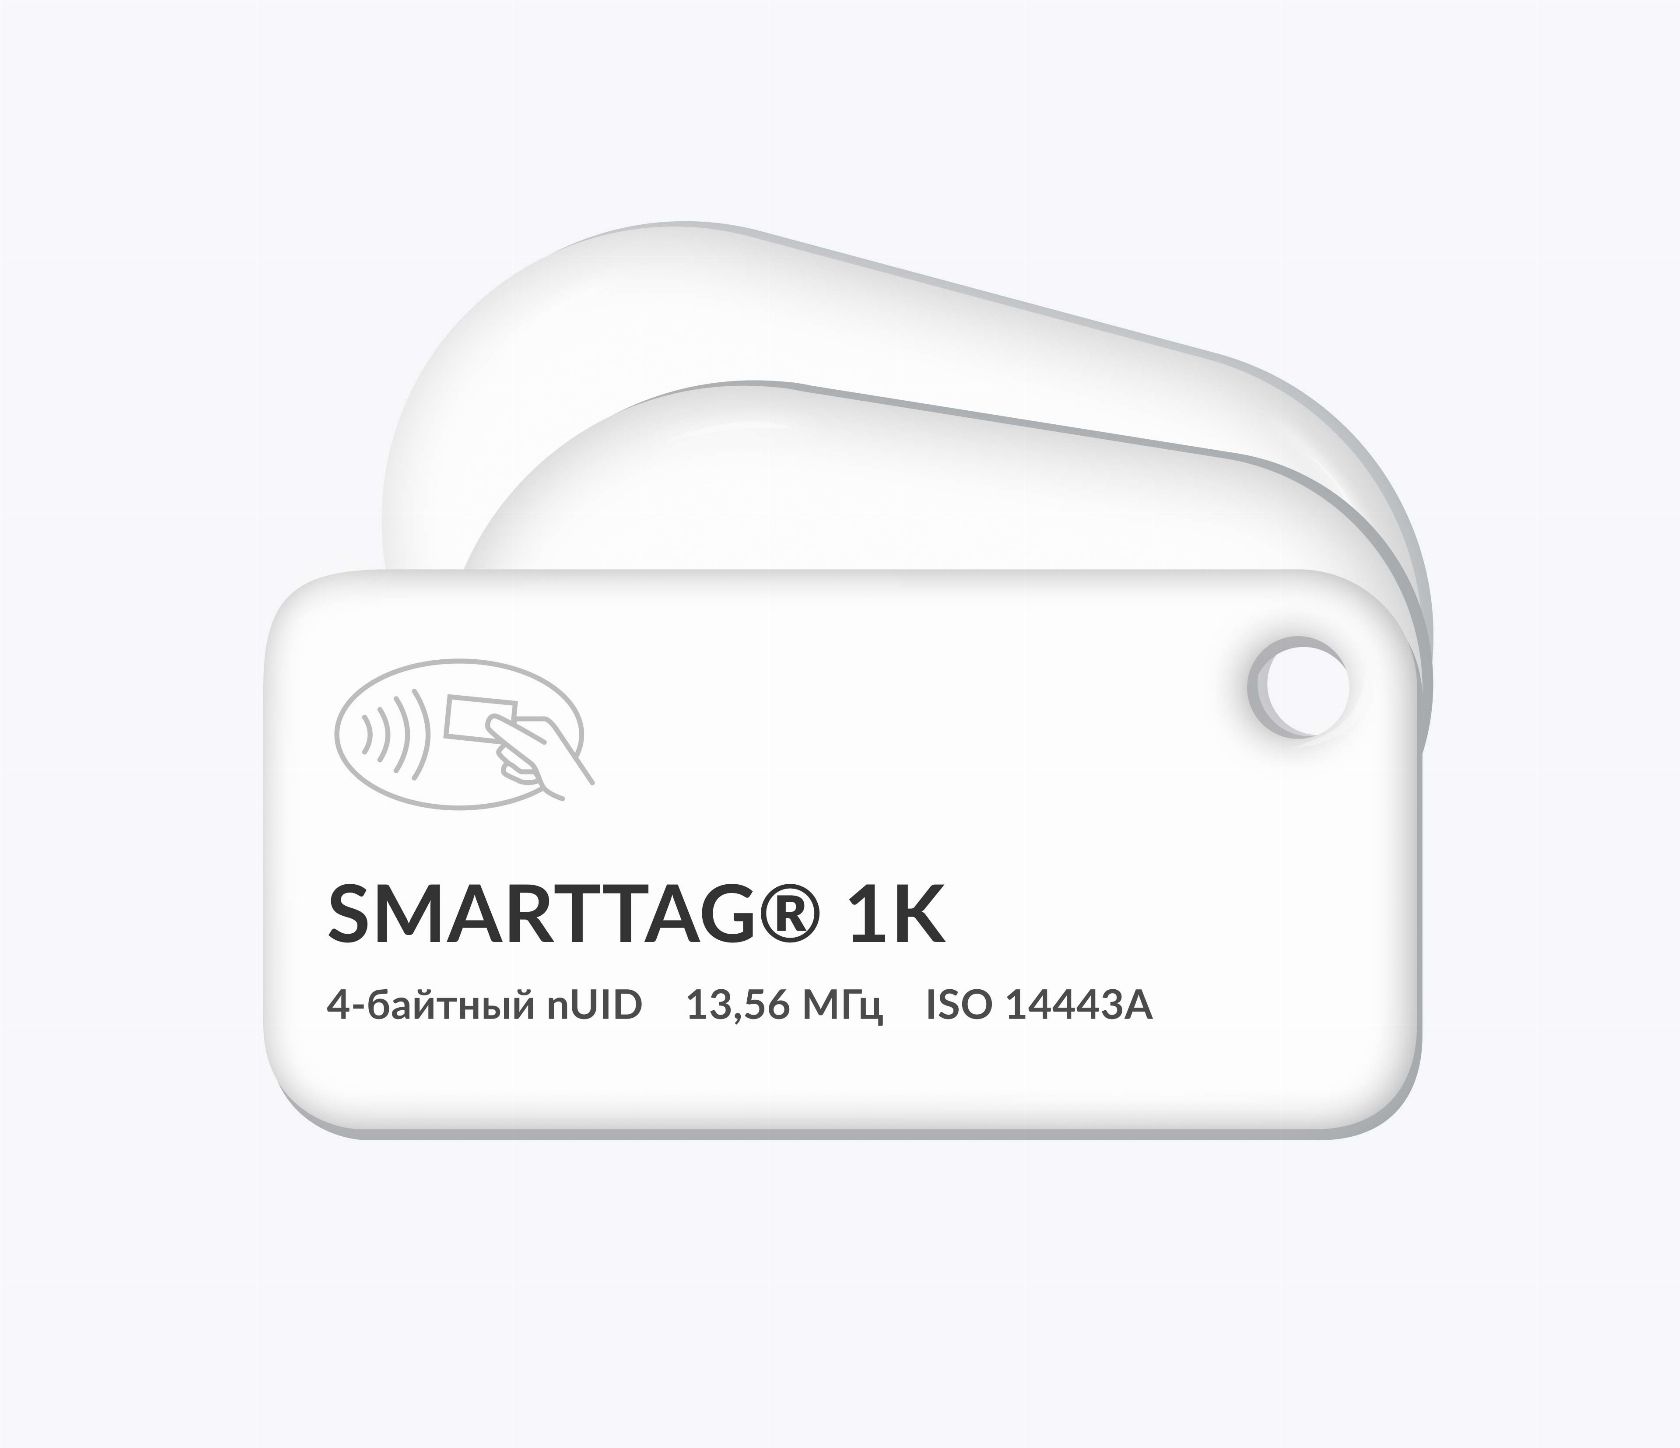 RFID-брелоки NEOKEY® с чипом SMARTTAG 1k 4 byte nUID и вашим логотипом RFID-брелоки NEOKEY® с чипом SMARTTAG 1k 4 byte nUID и вашим логотипом